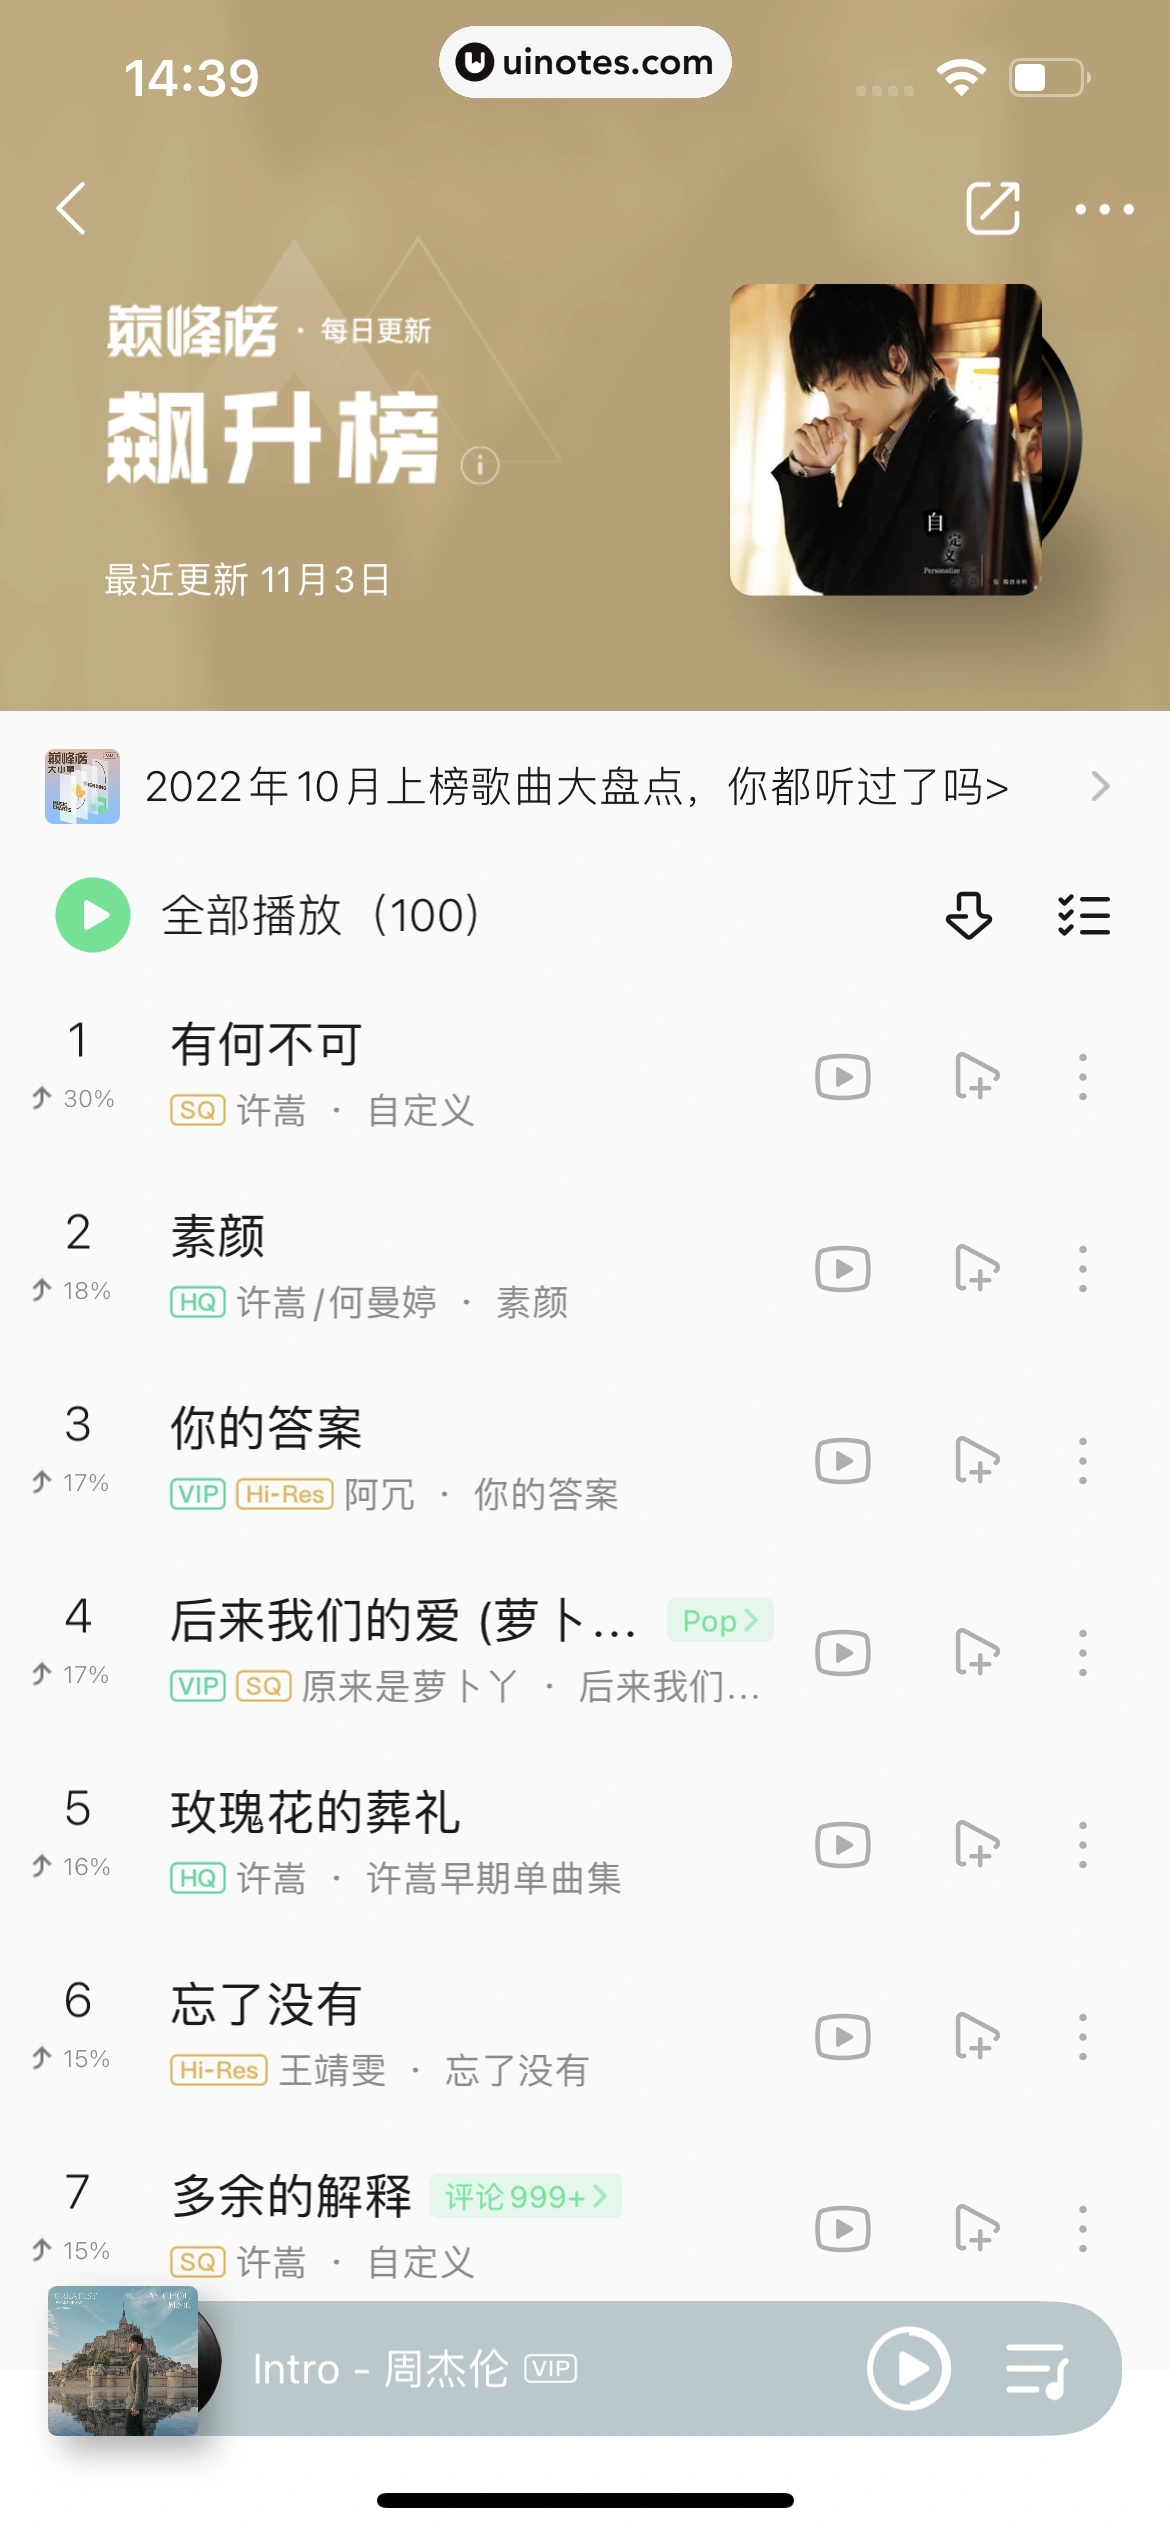 QQ音乐 App 截图 114 - UI Notes